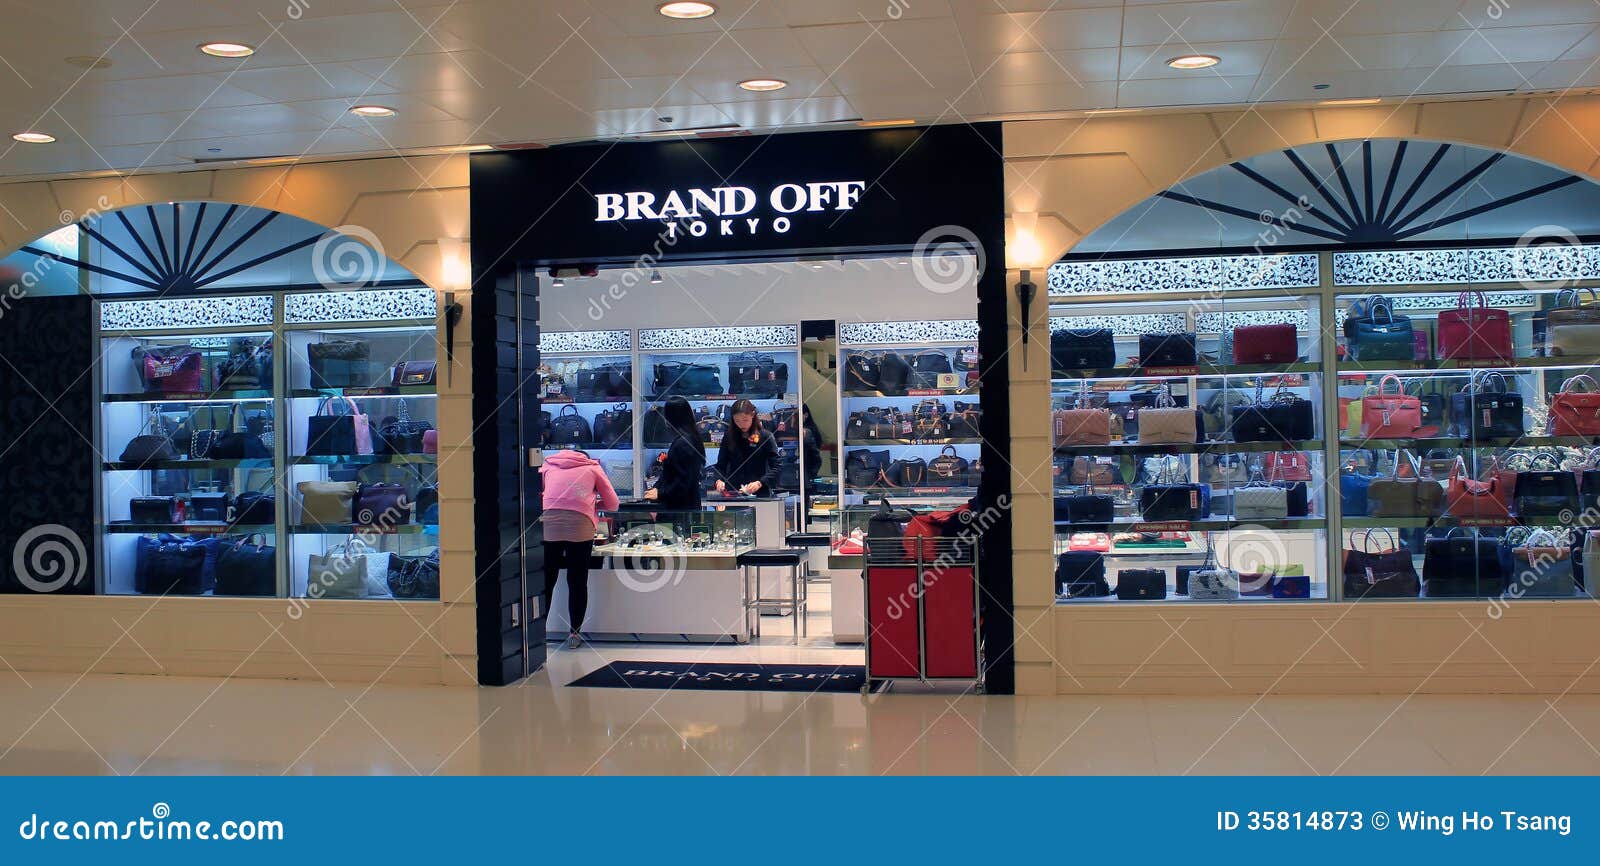 Brand Off Tokyo Shop In Hong Kong Editorial Stock Photo - Image: 35814873